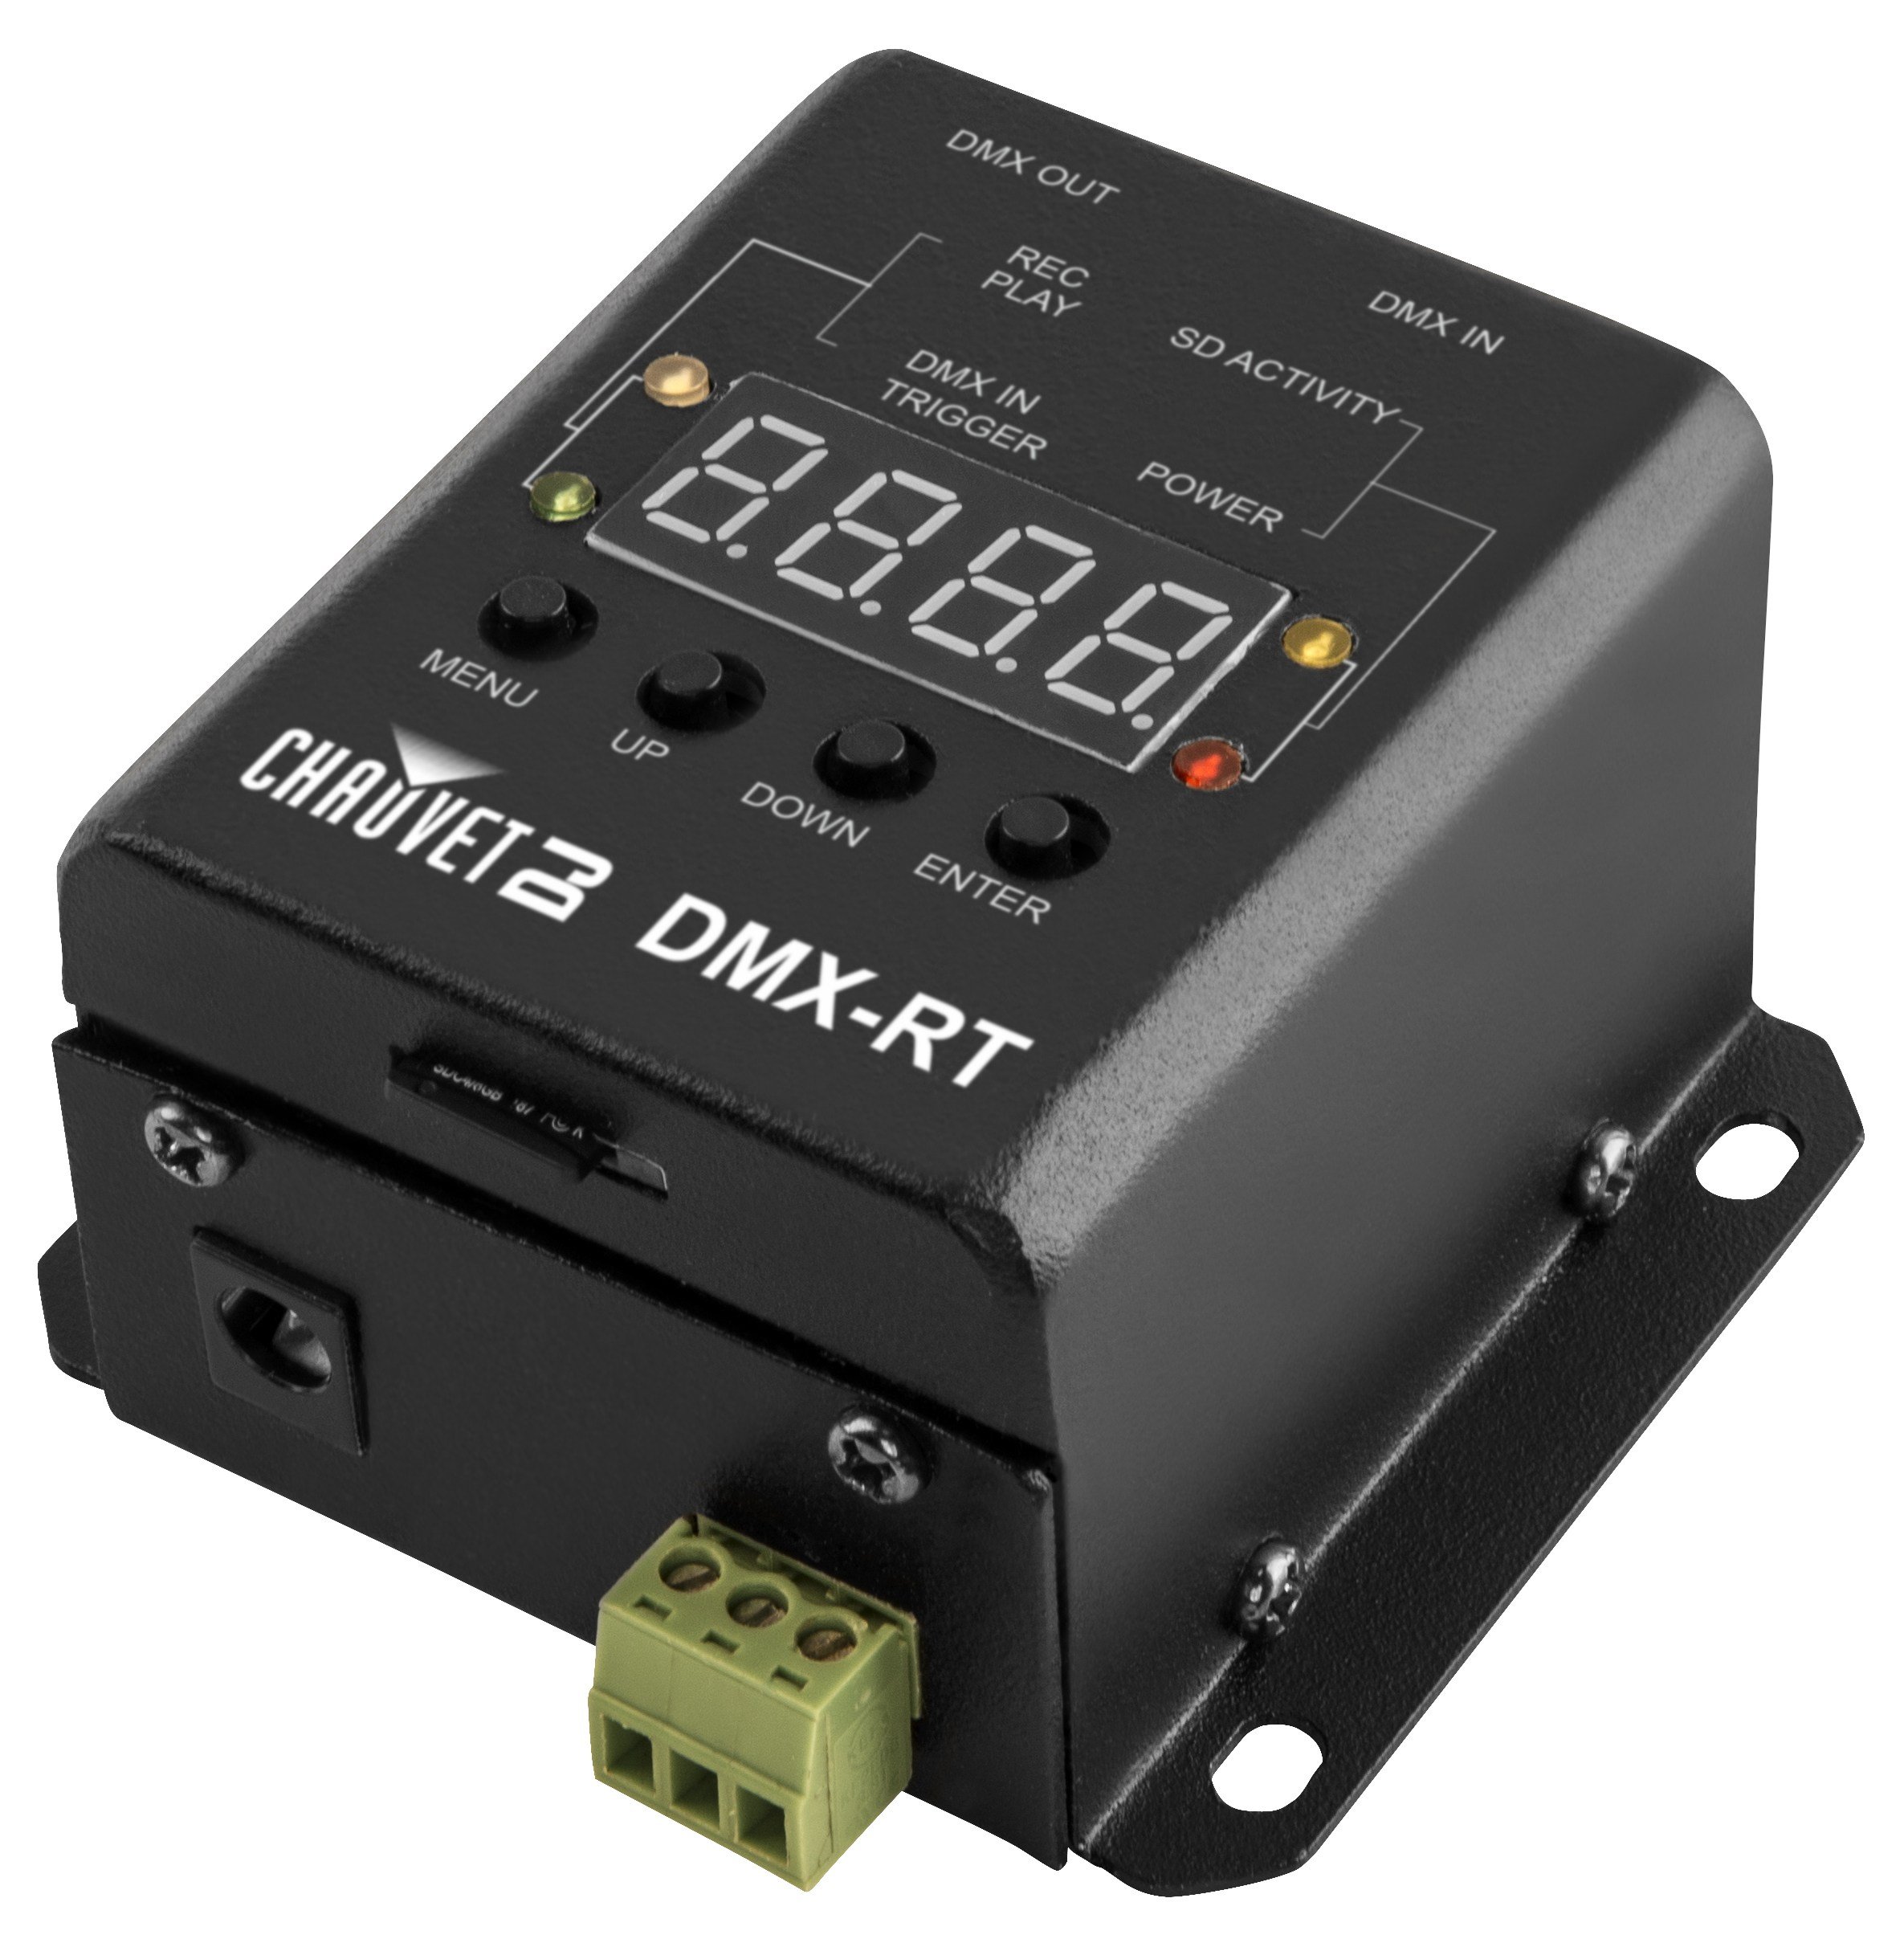 Chauvet DMX-RT Recording Device